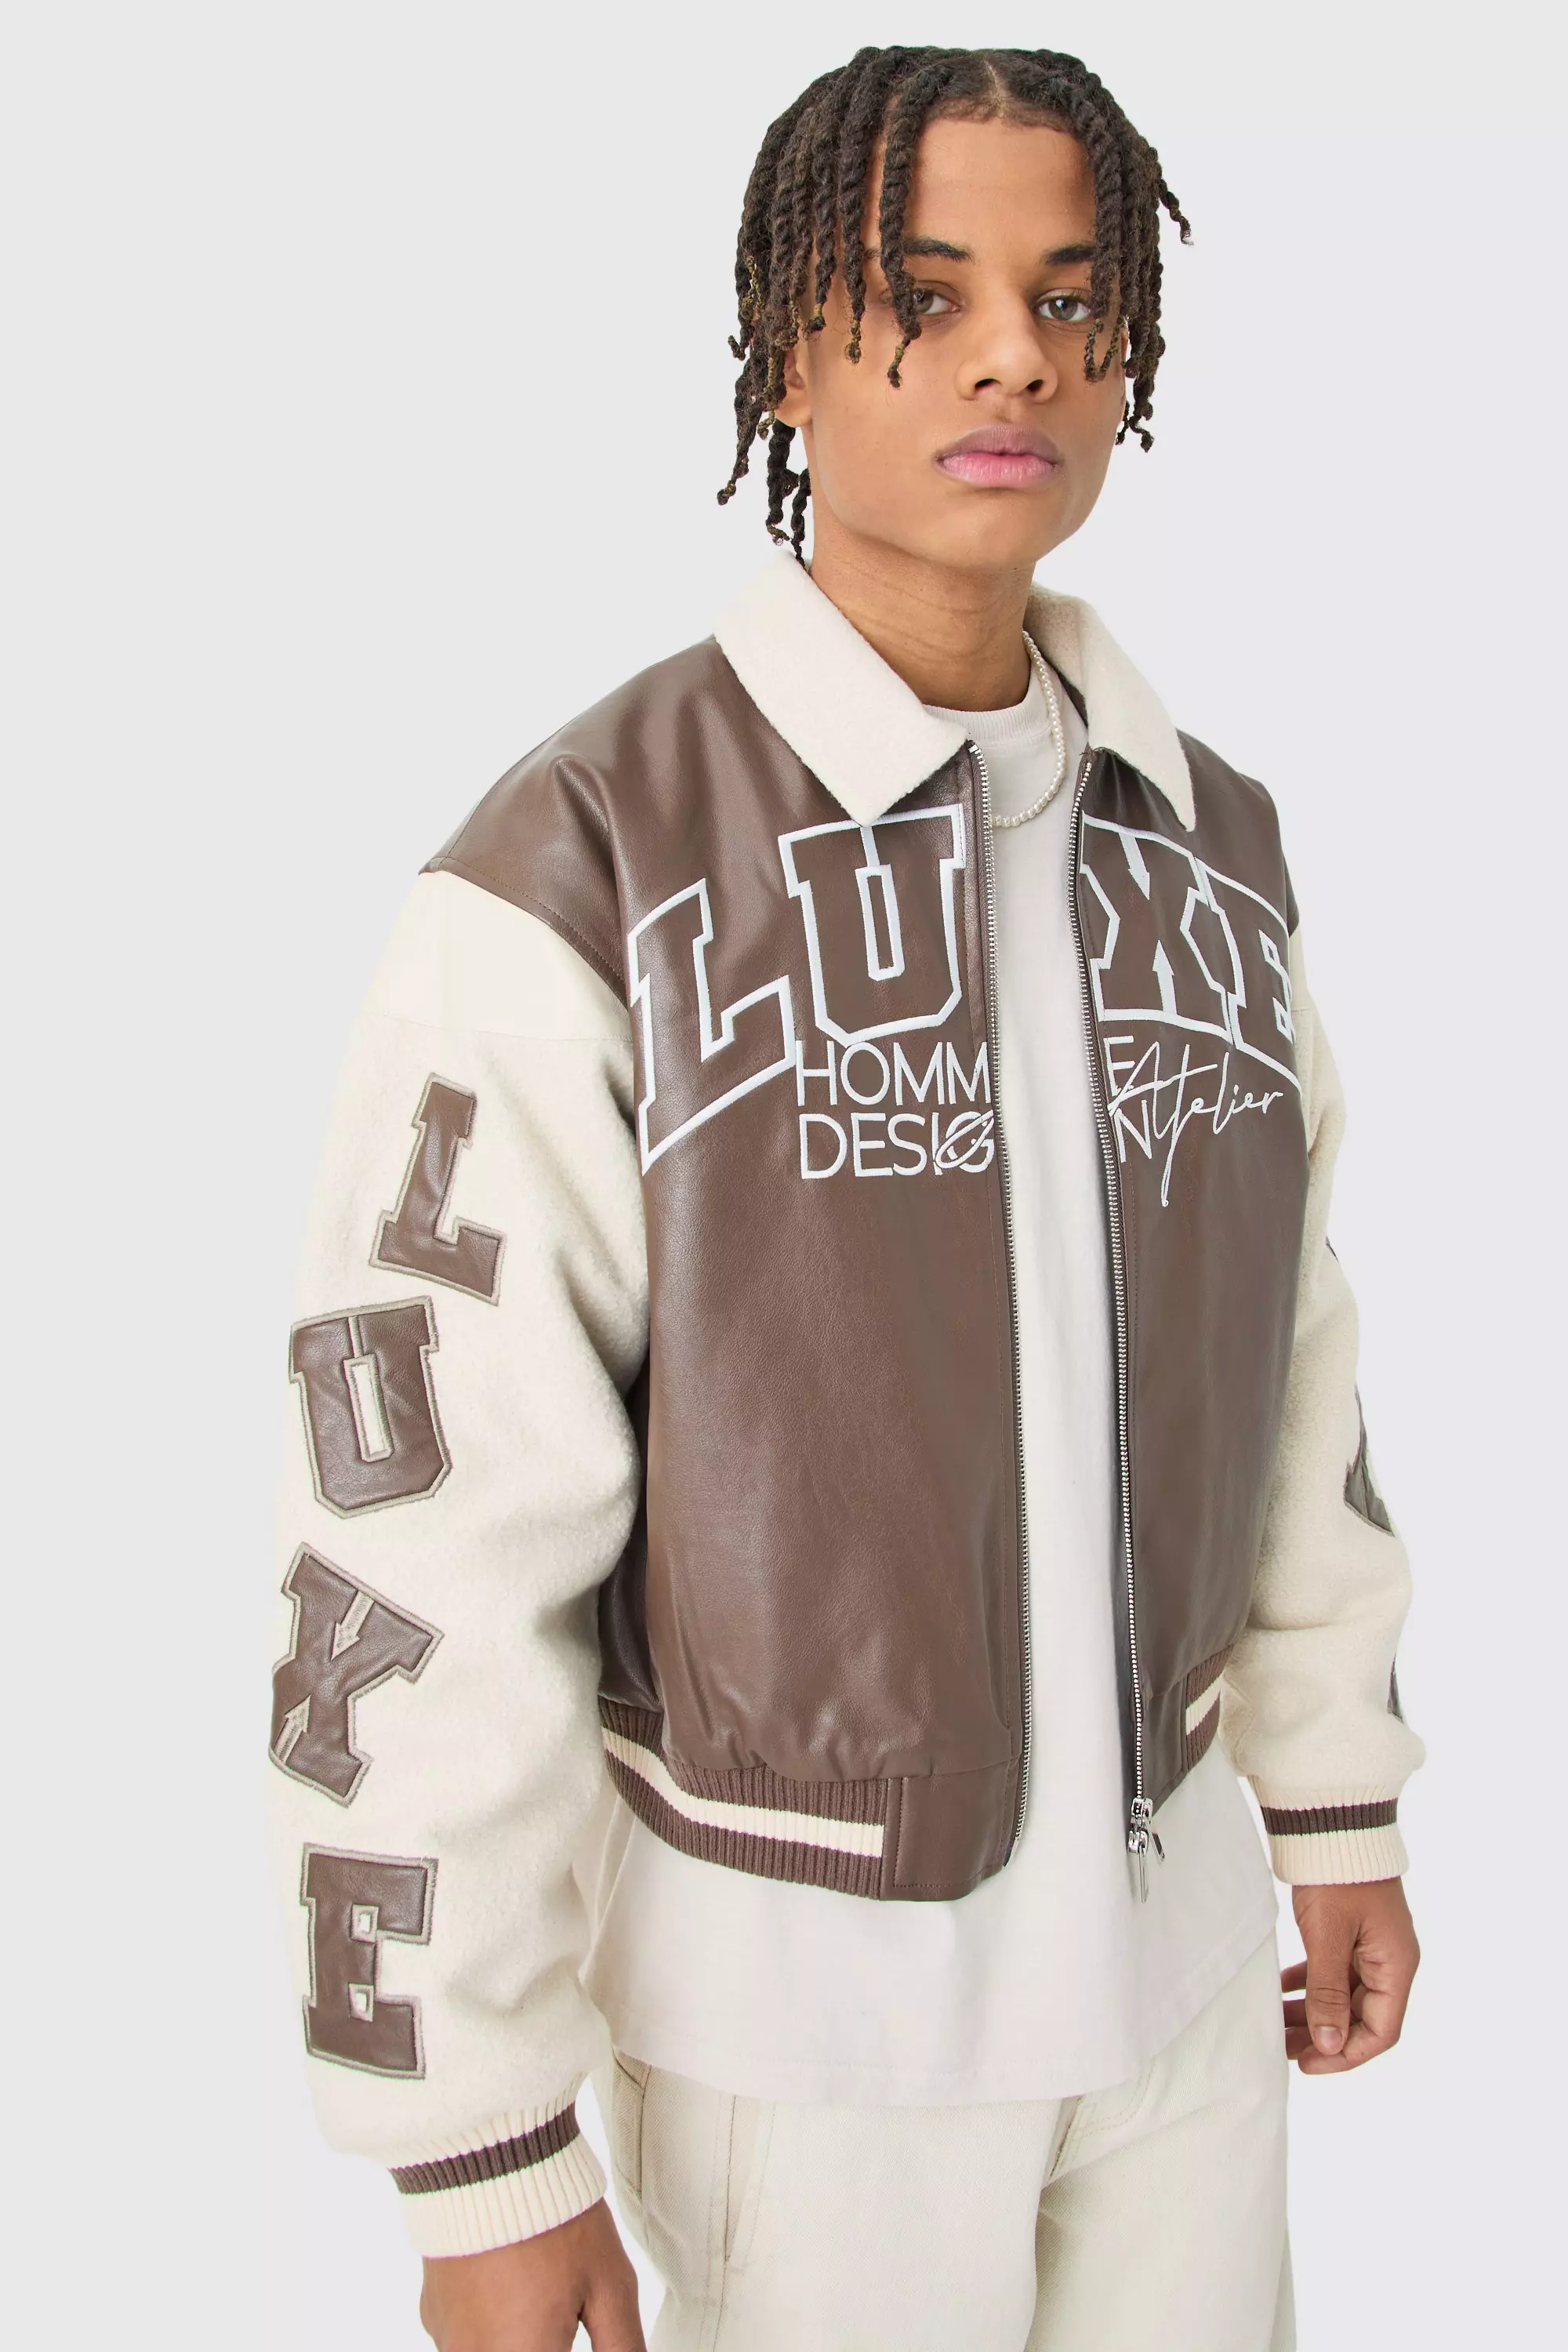 LV Monogram Teddy Jacket  Jackets, Denim design, Monogram jacket